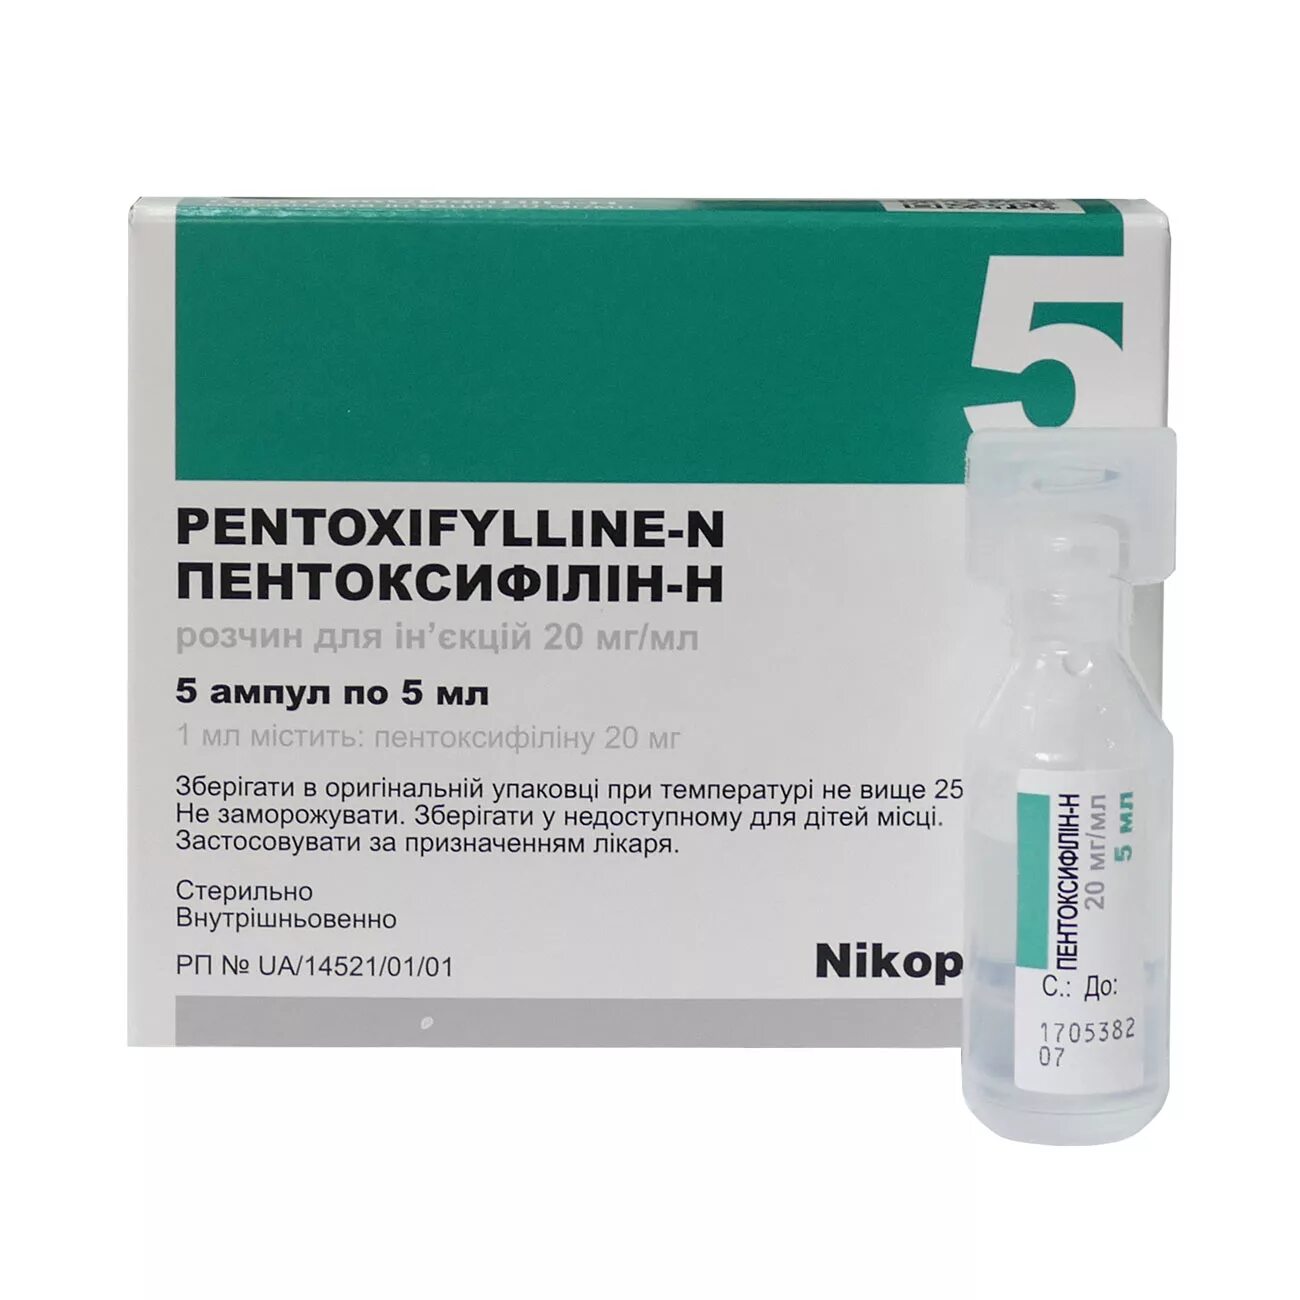 Пентоксифиллин таблетки 100 мг. Пентоксифиллин 400 мг. Пентоксифиллин 100 ампулы. Пентоксифиллин 100 мг ампулы.